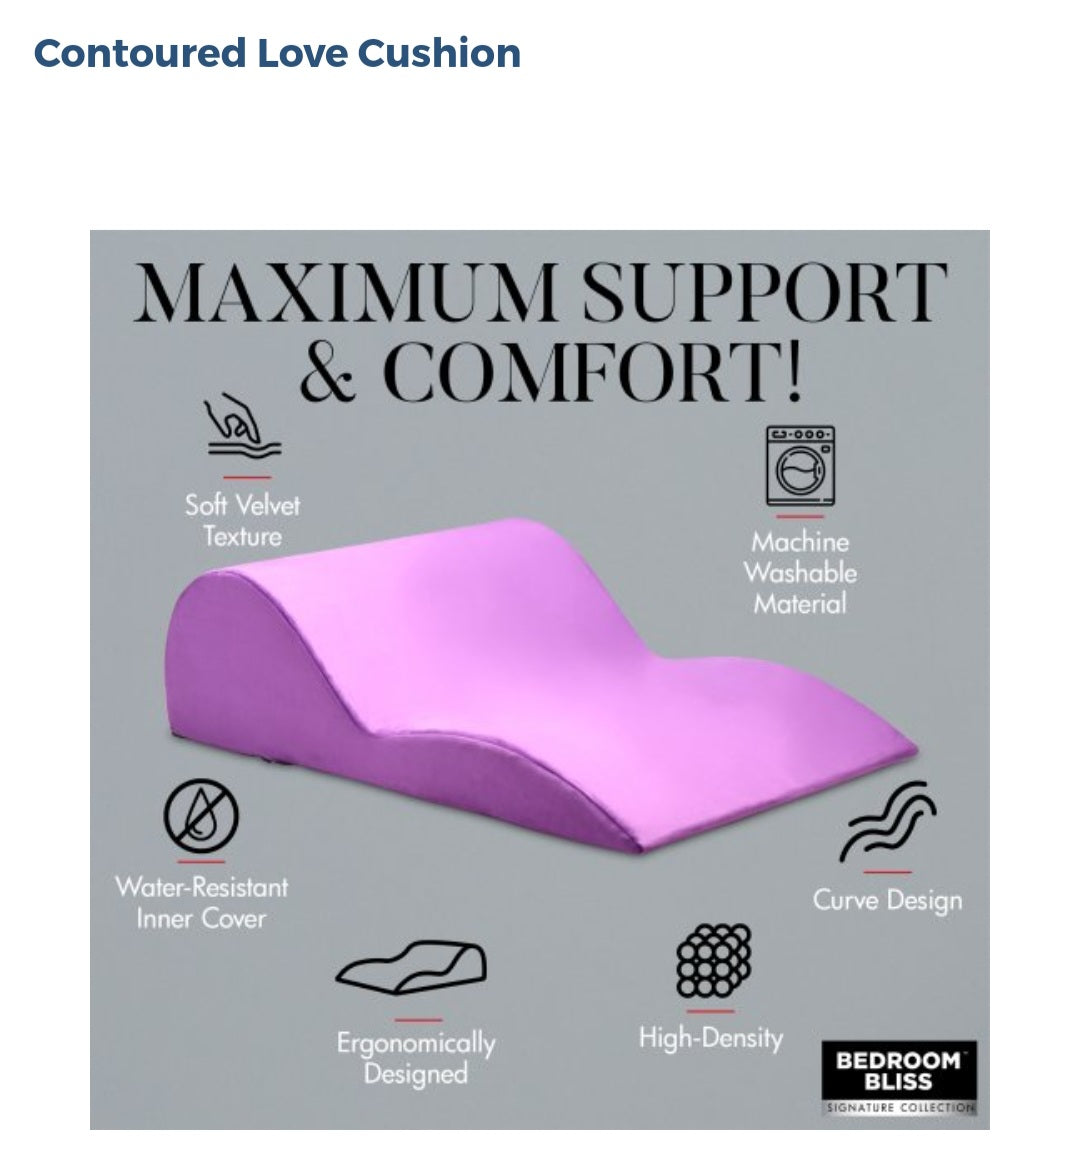 Contoured Love Cushion